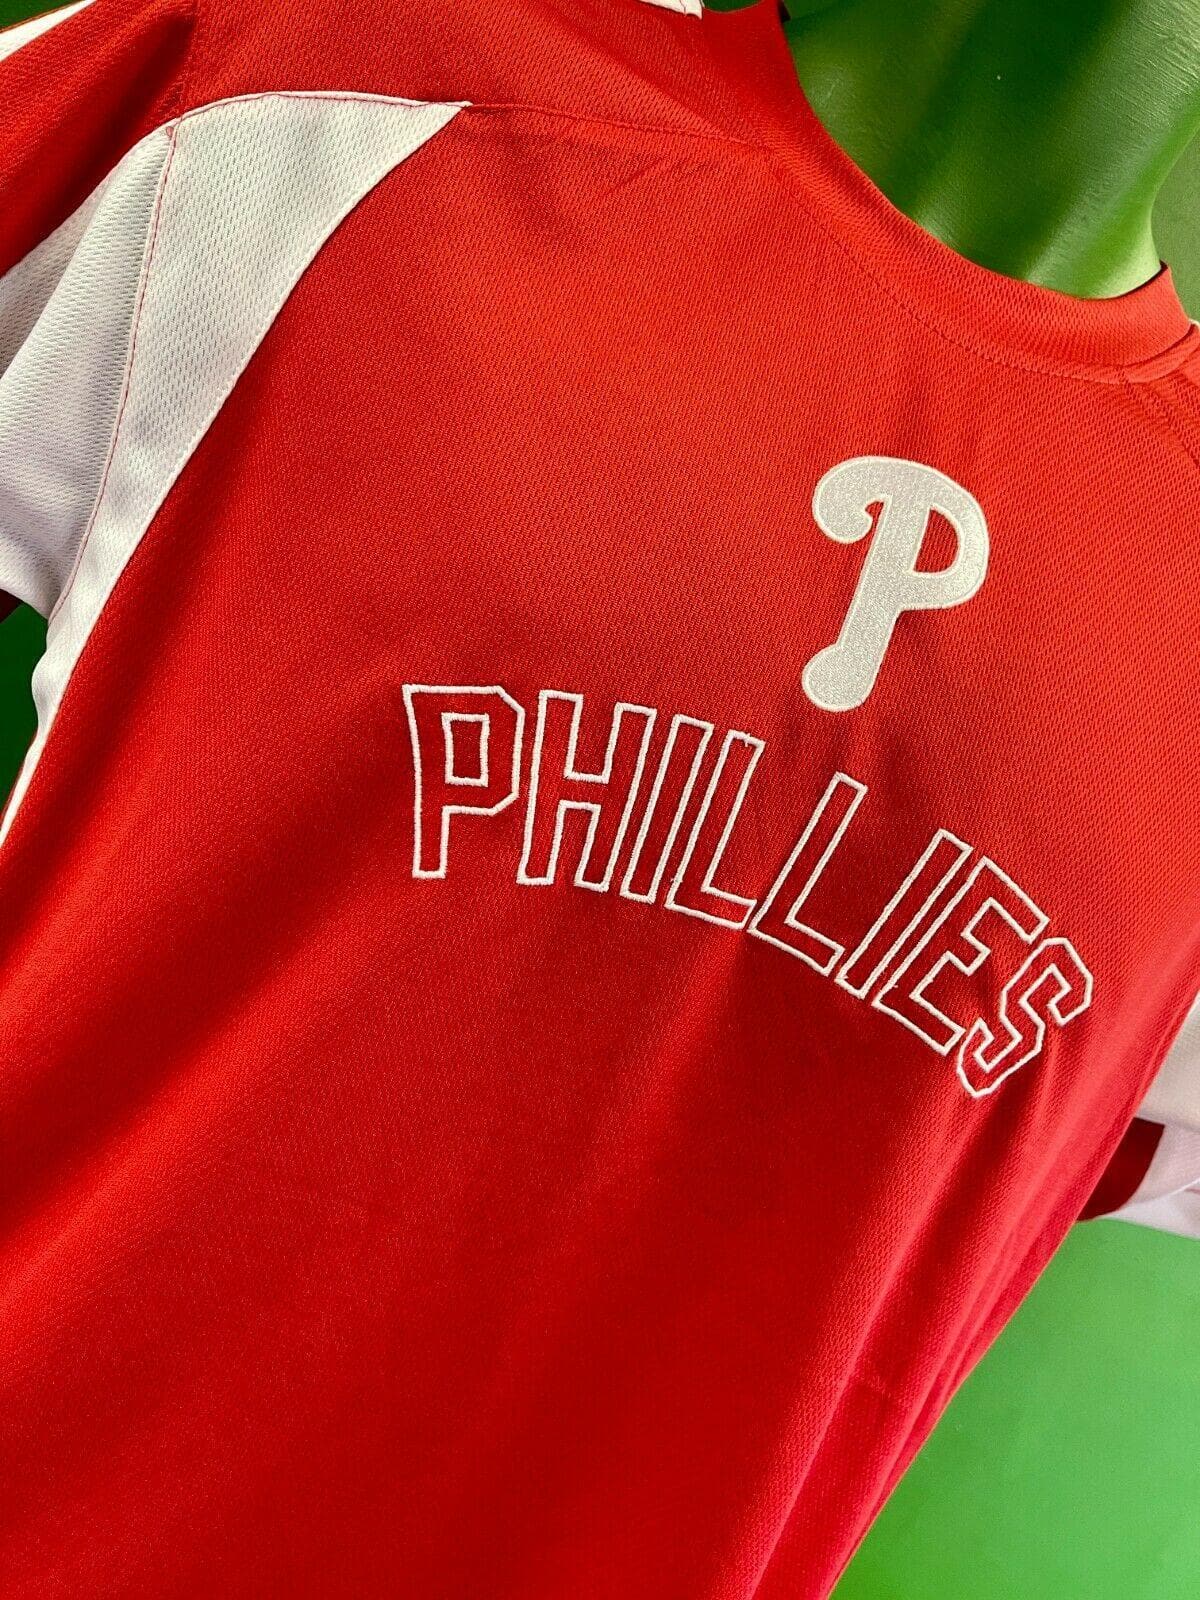 MLB Philadelphia Phillies Team Athletics Wicking T-Shirt Youth XL 14-16